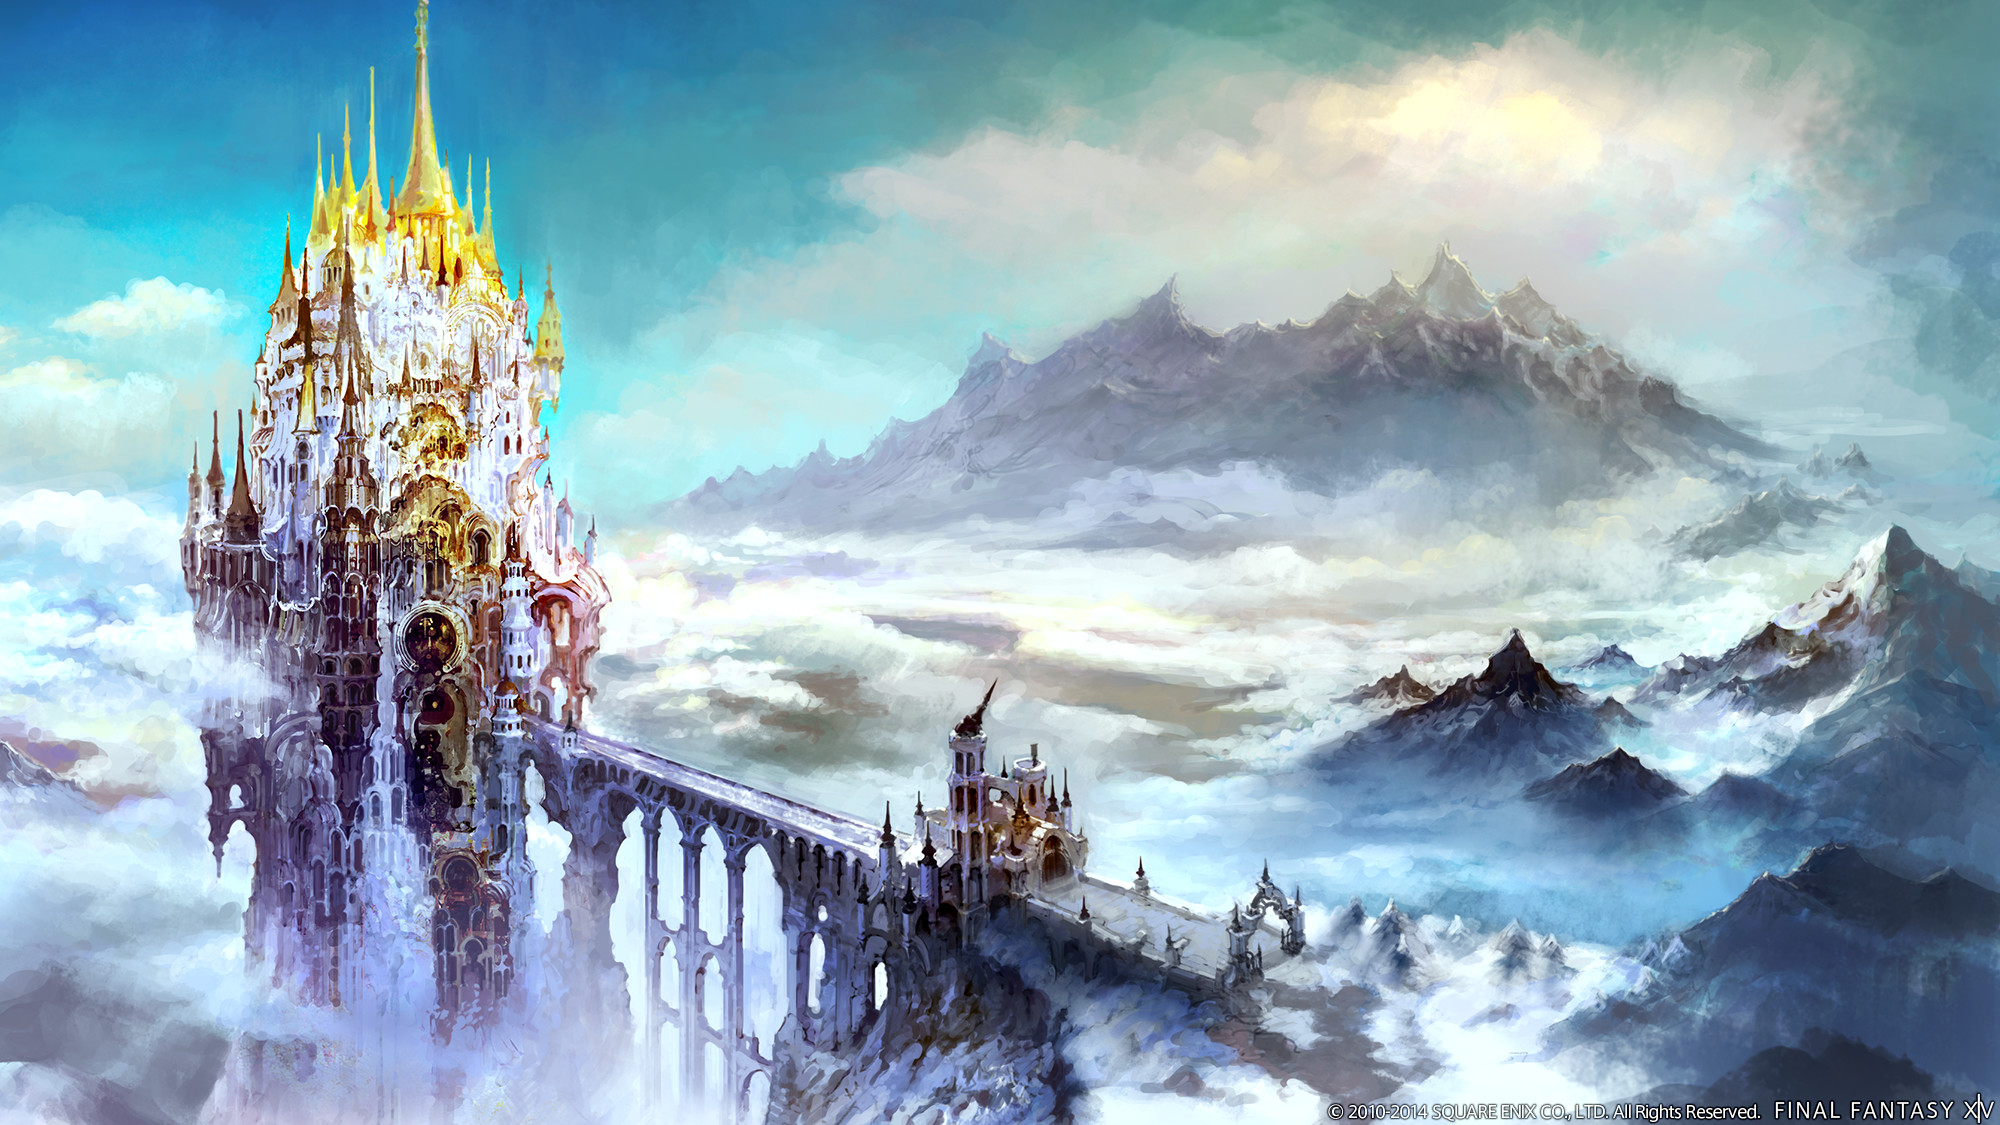 2000x1125 Final Fantasy XIV: A Realm Reborn HD Wallpaper | Hintergrund |  |  ID:551770 - Wallpaper Abyss